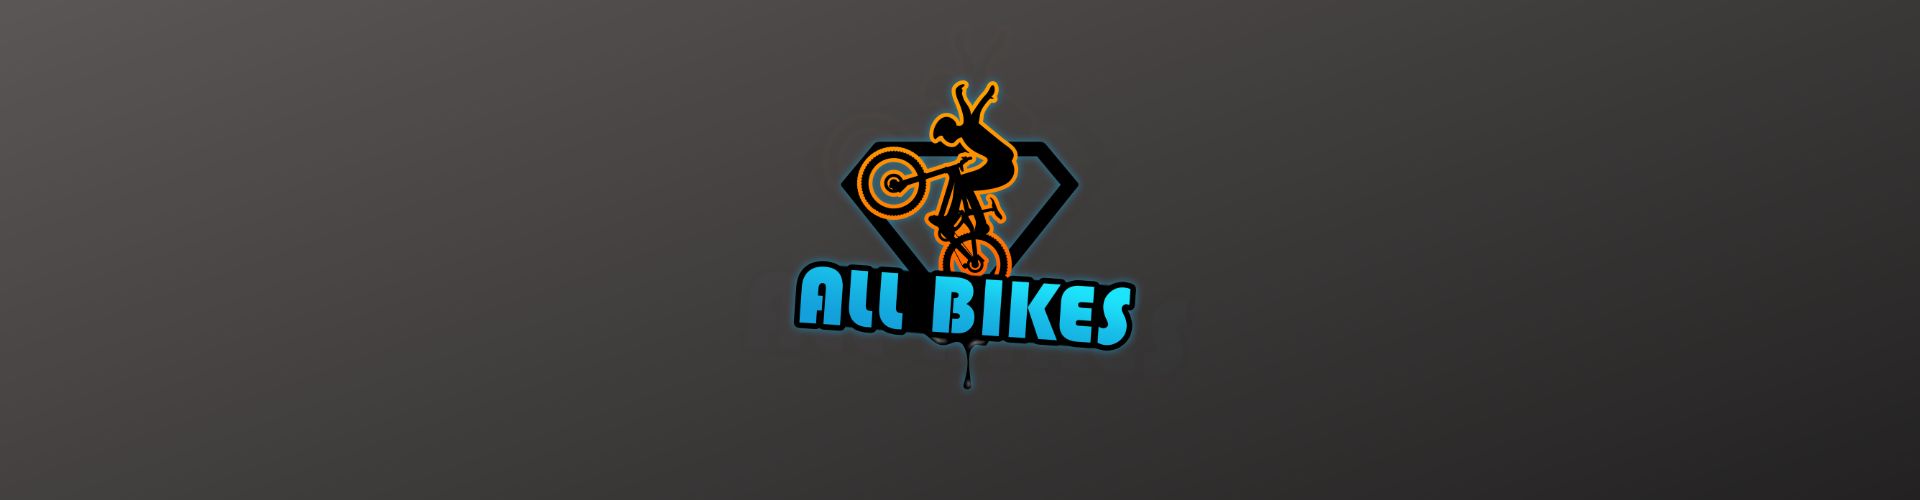 All Bikes